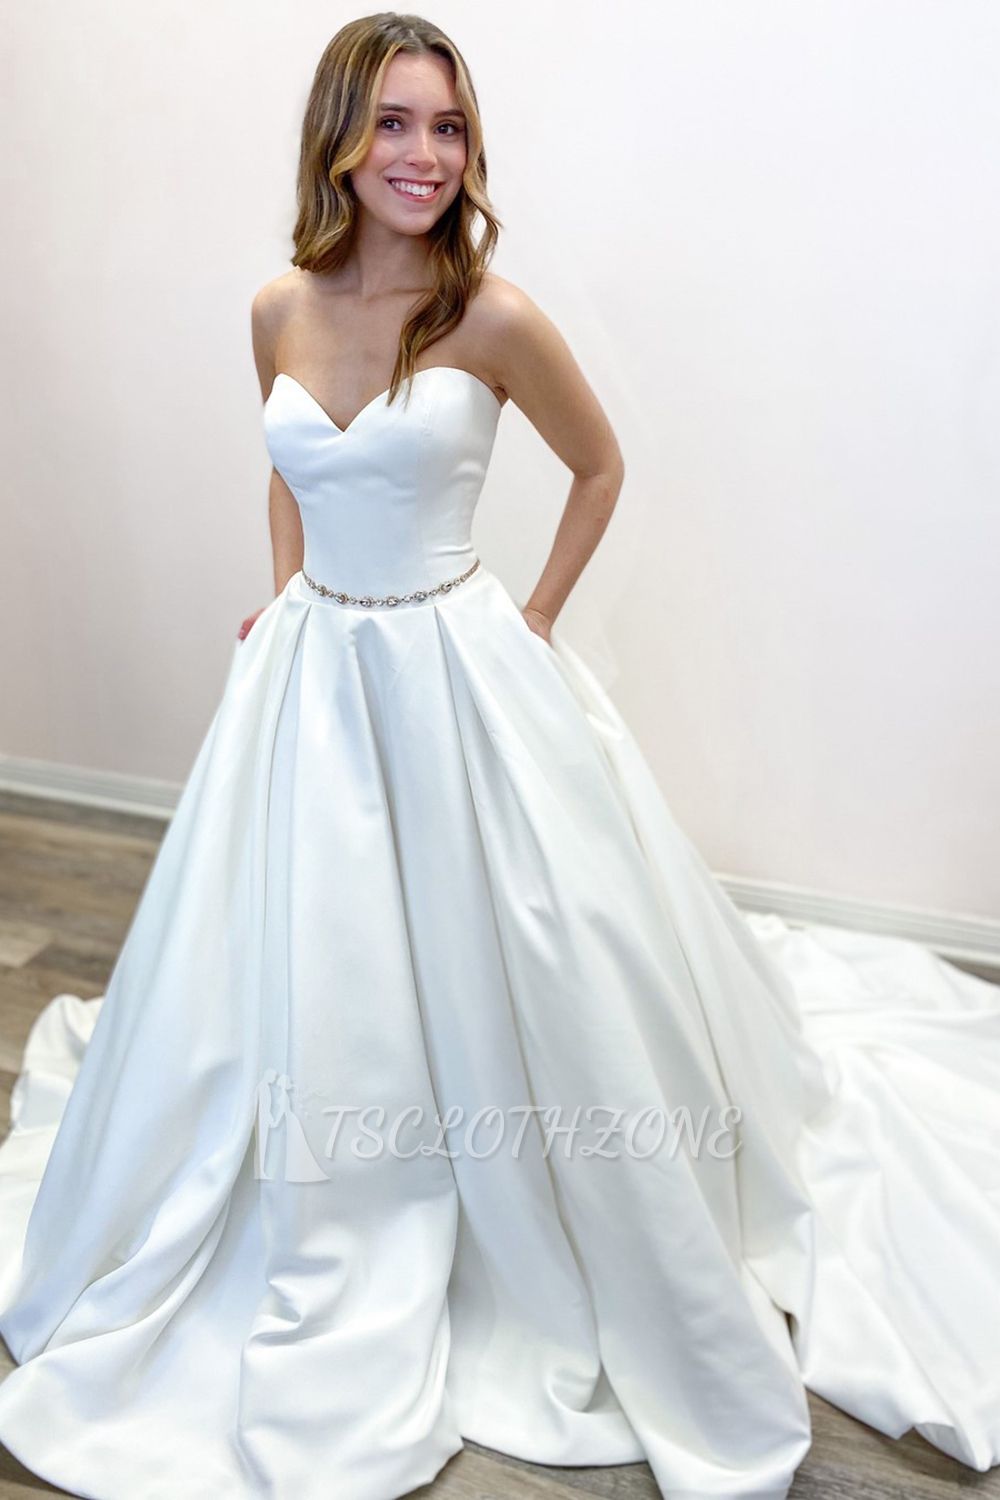 A-Line Floor-length Sweetheart Backless Wedding Dress With Ruffles Pockets